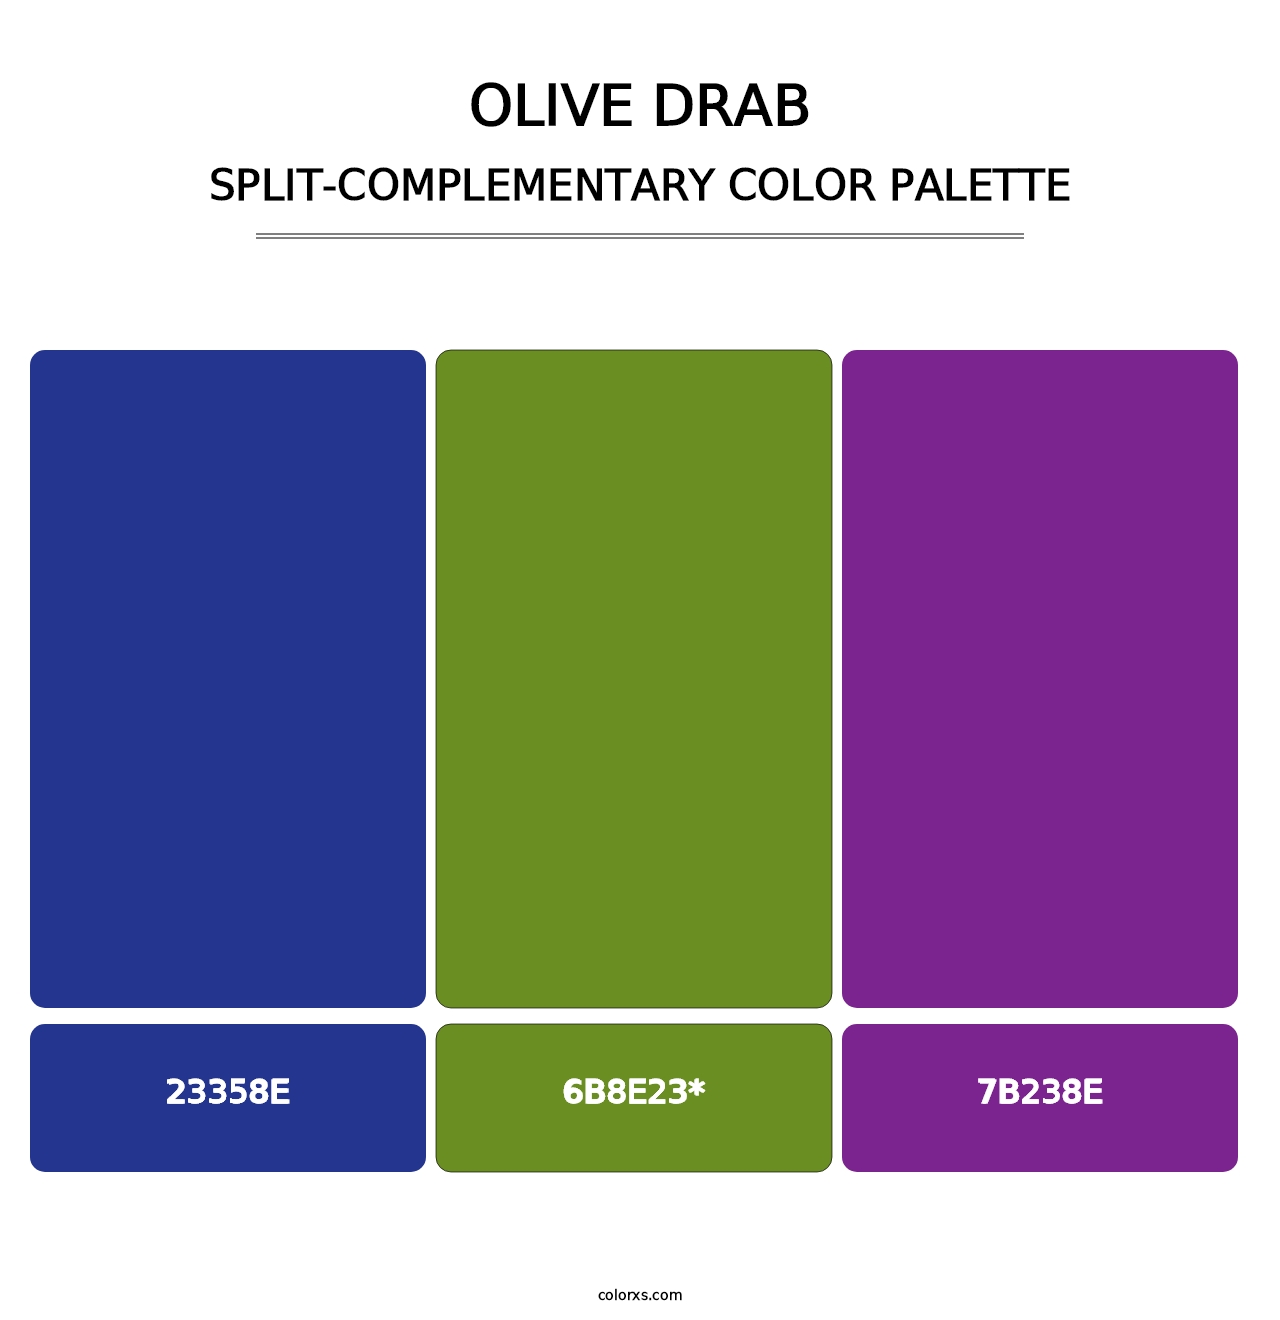 Olive Drab - Split-Complementary Color Palette